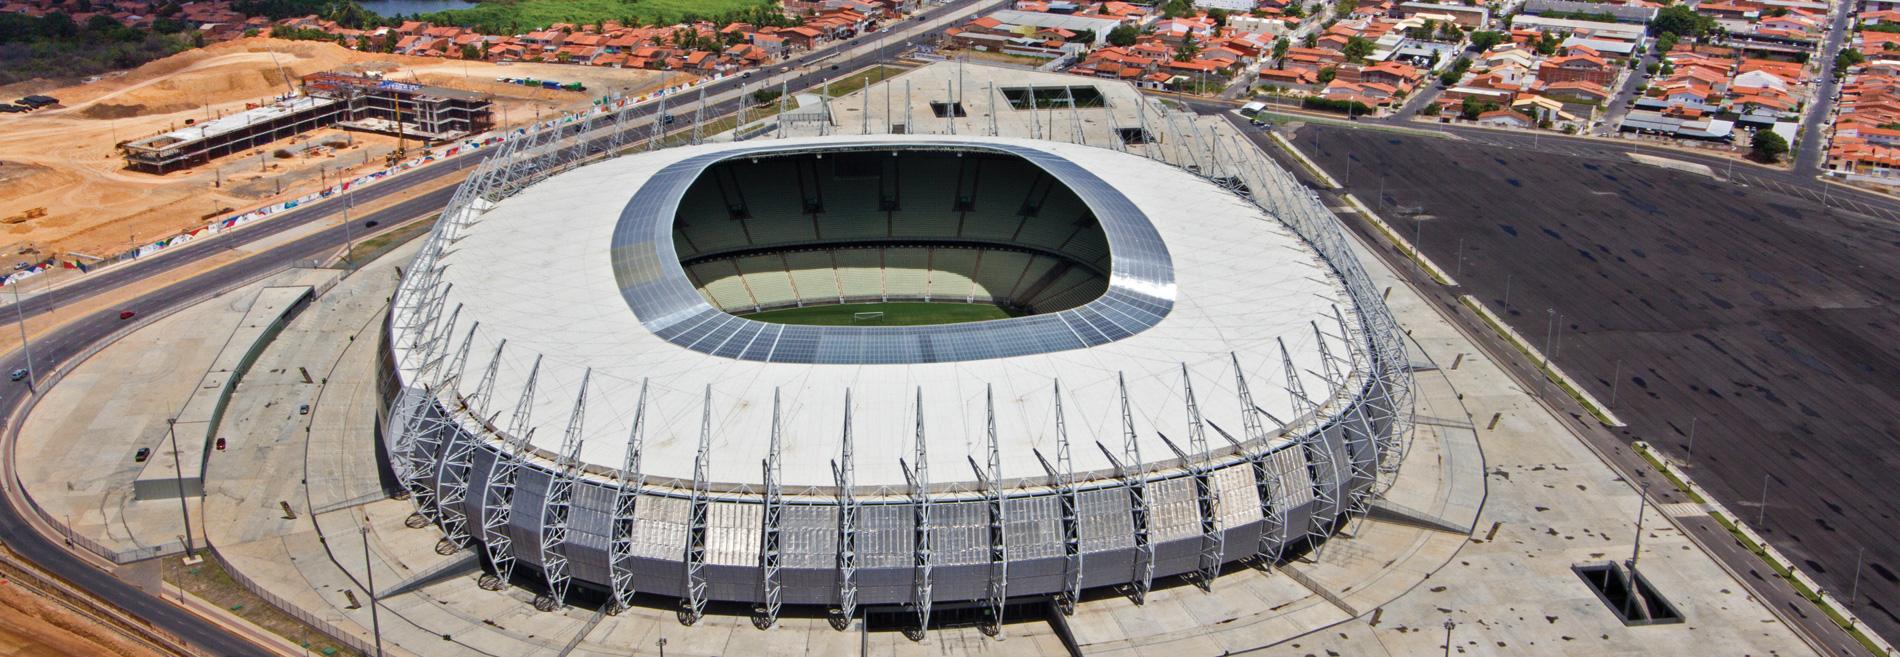 SUNTUF_Roof_Castelao_Stadium_Brazil_Top_2